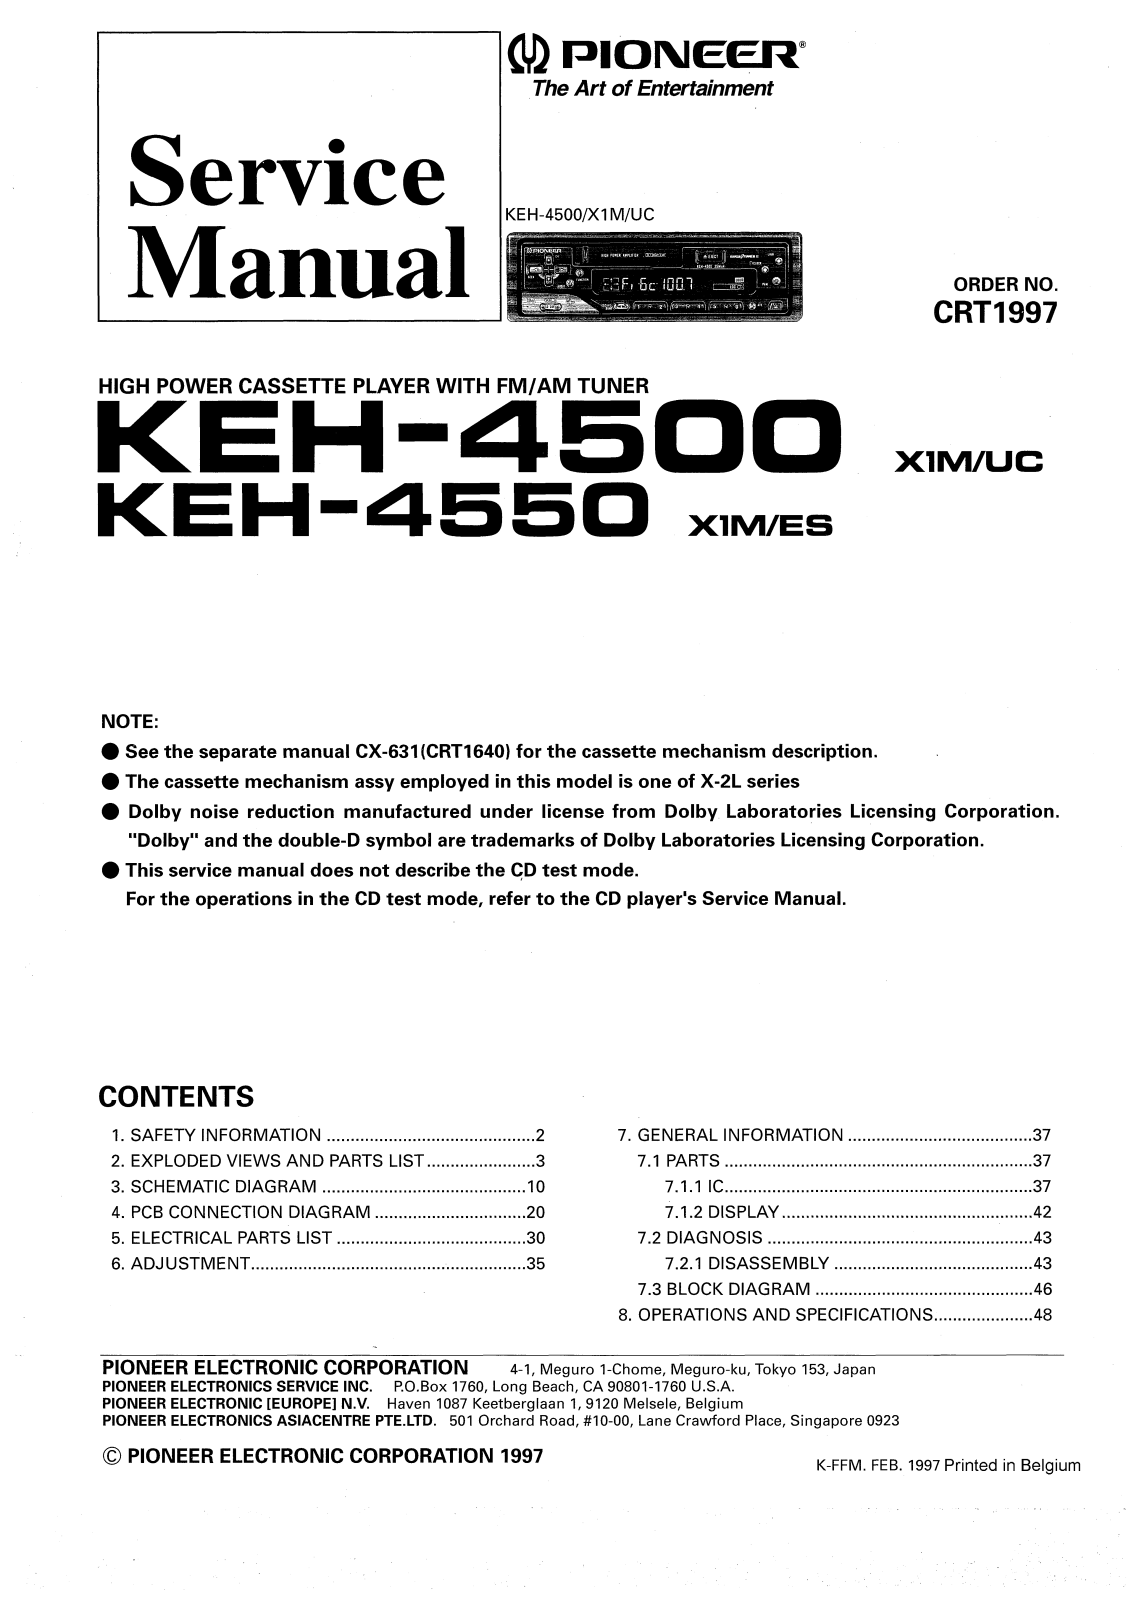 Pioneer KEH-4500, KEH-4550 Service Manual